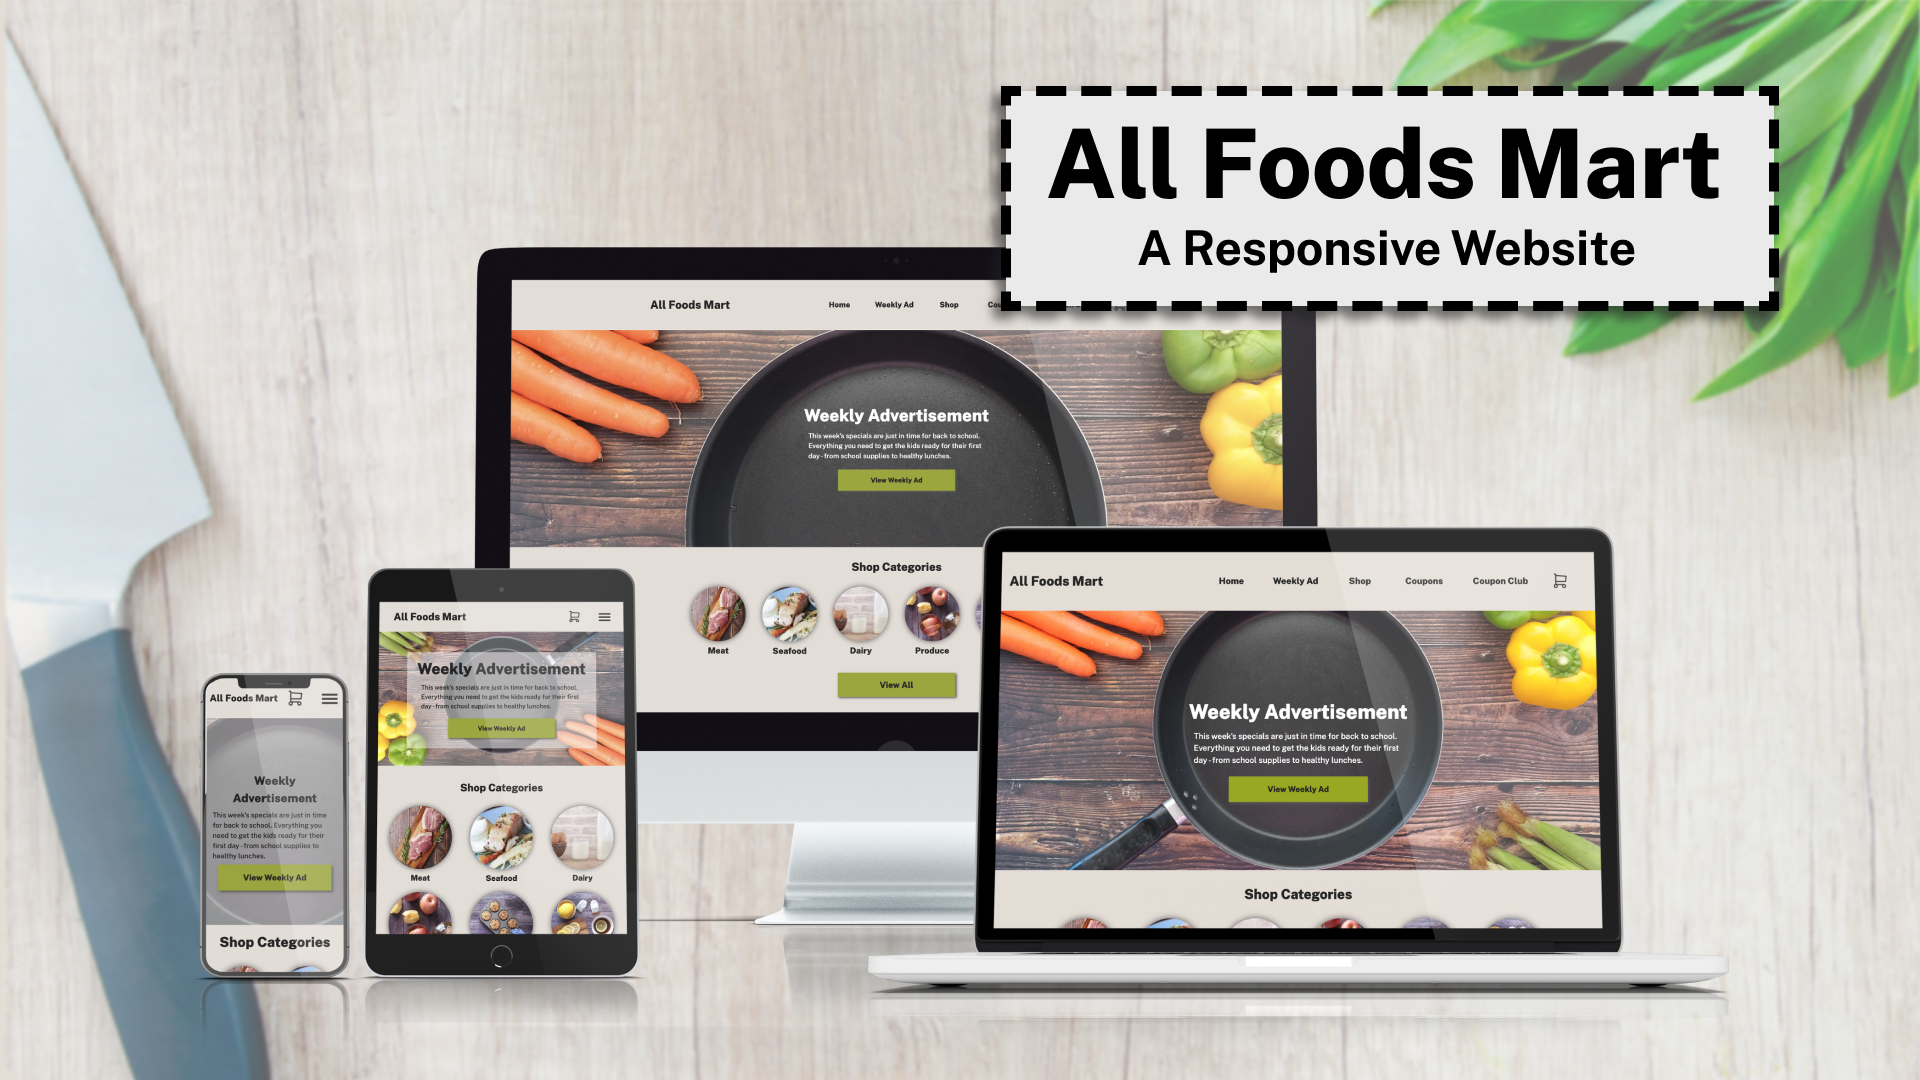 All Foods Mart: A Responsive Website